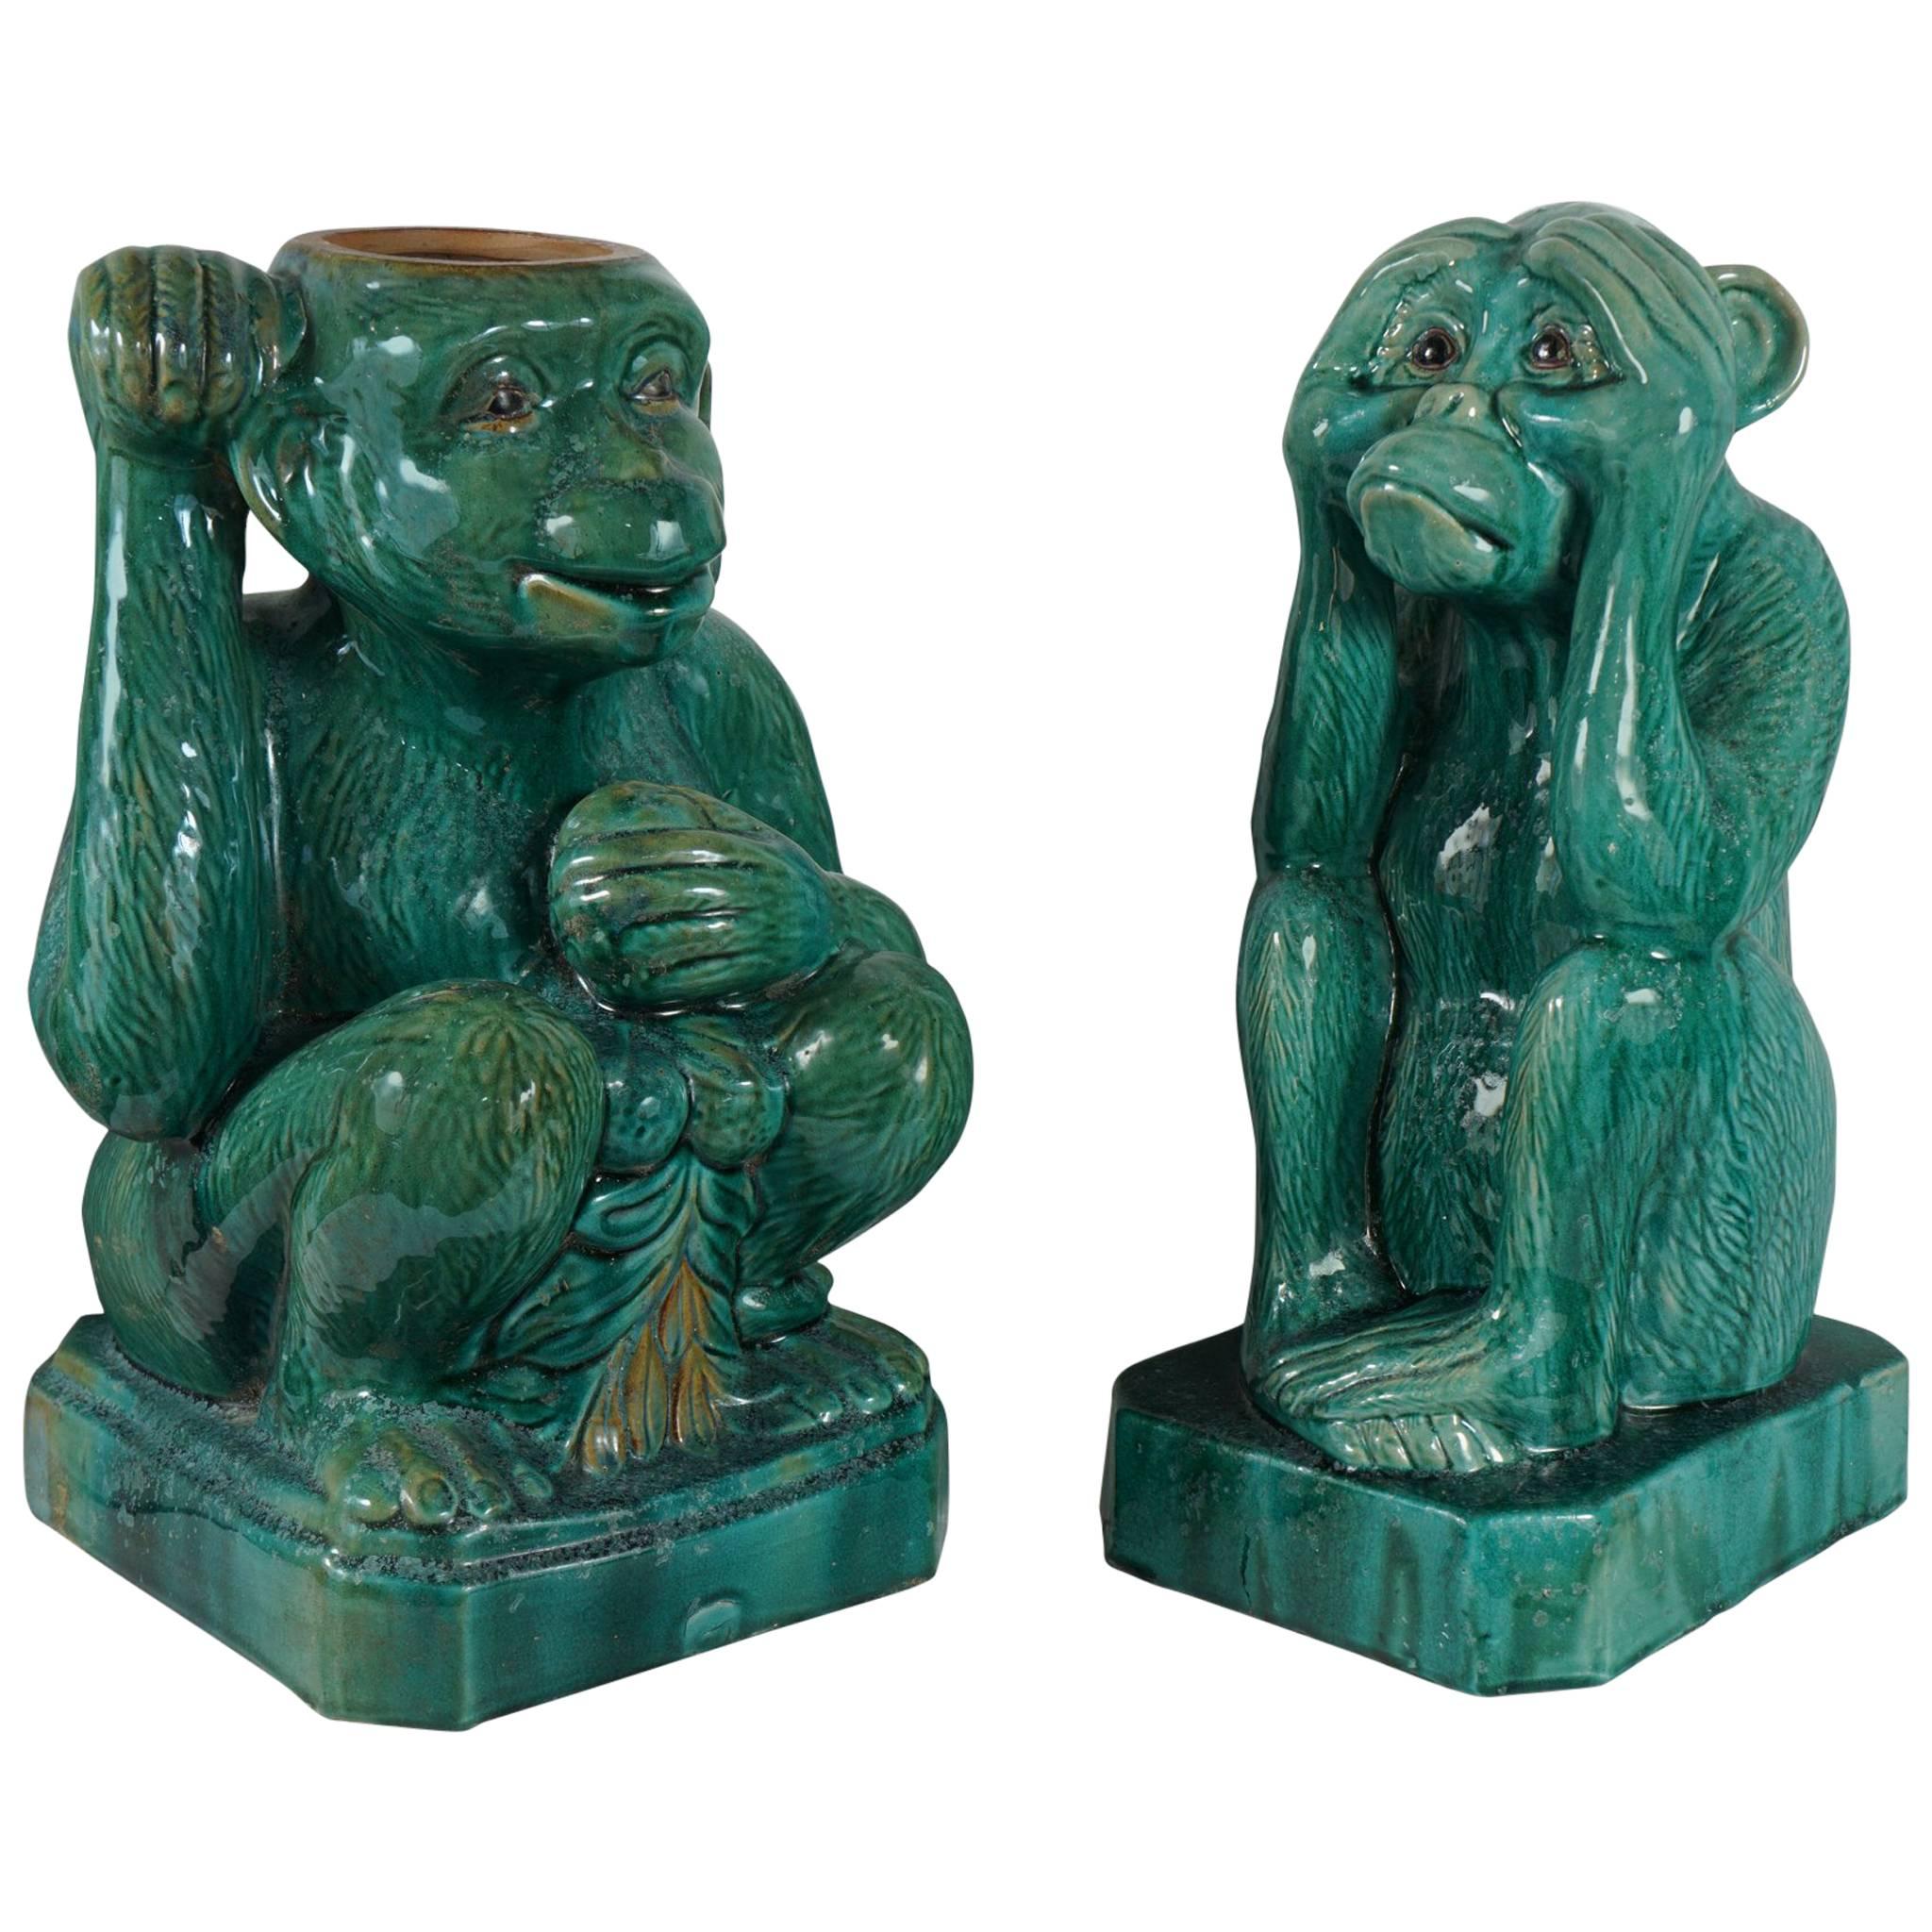 Two Companion Glazed Terra Cotta Monkeys 